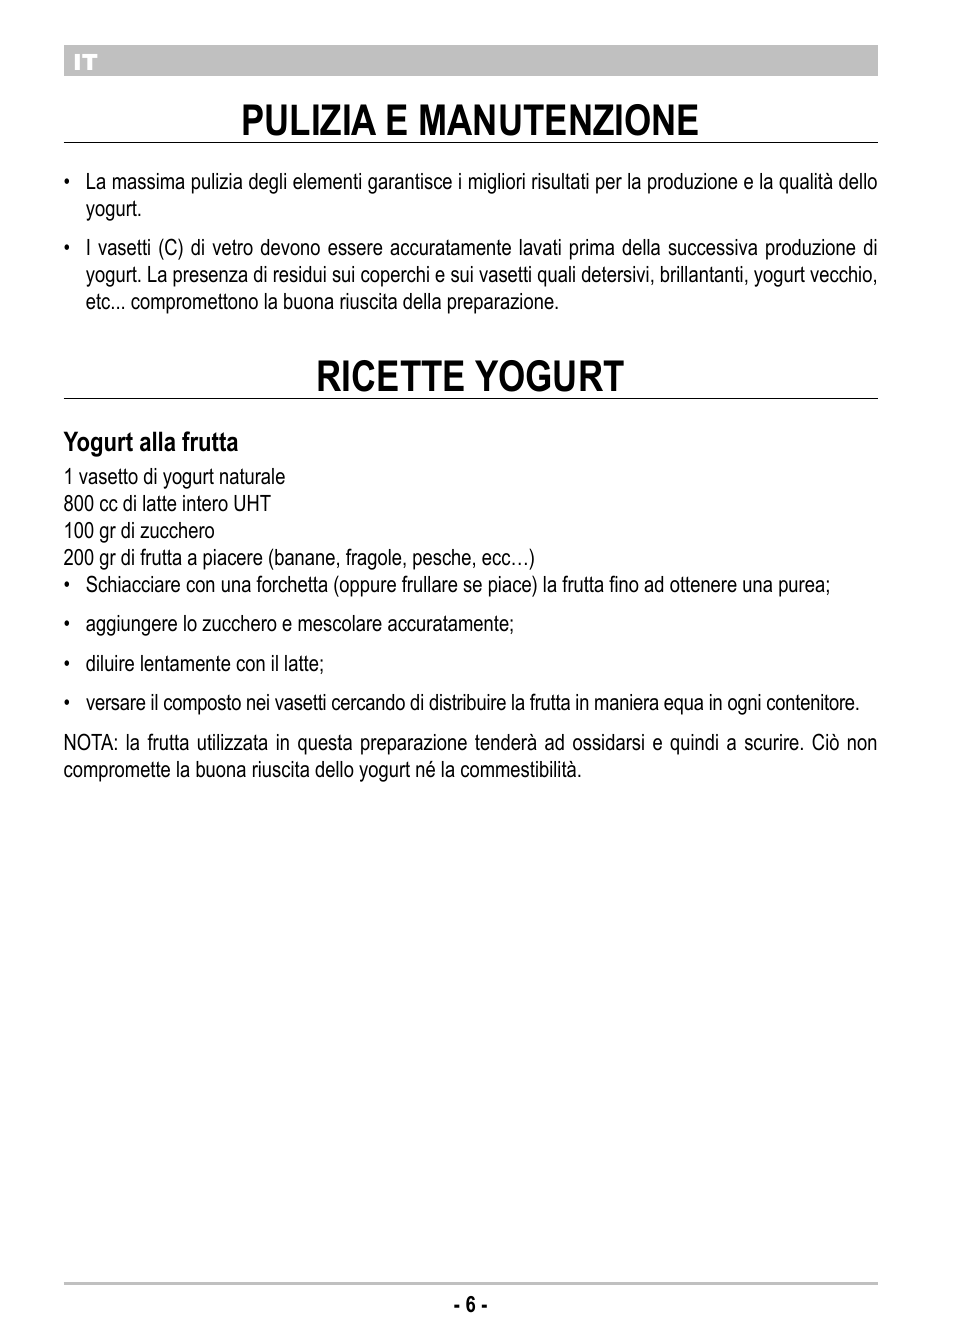 Pulizia e manutenzione, Ricette yogurt | ARIETE Yogurella Metal 620 User Manual | Page 8 / 62